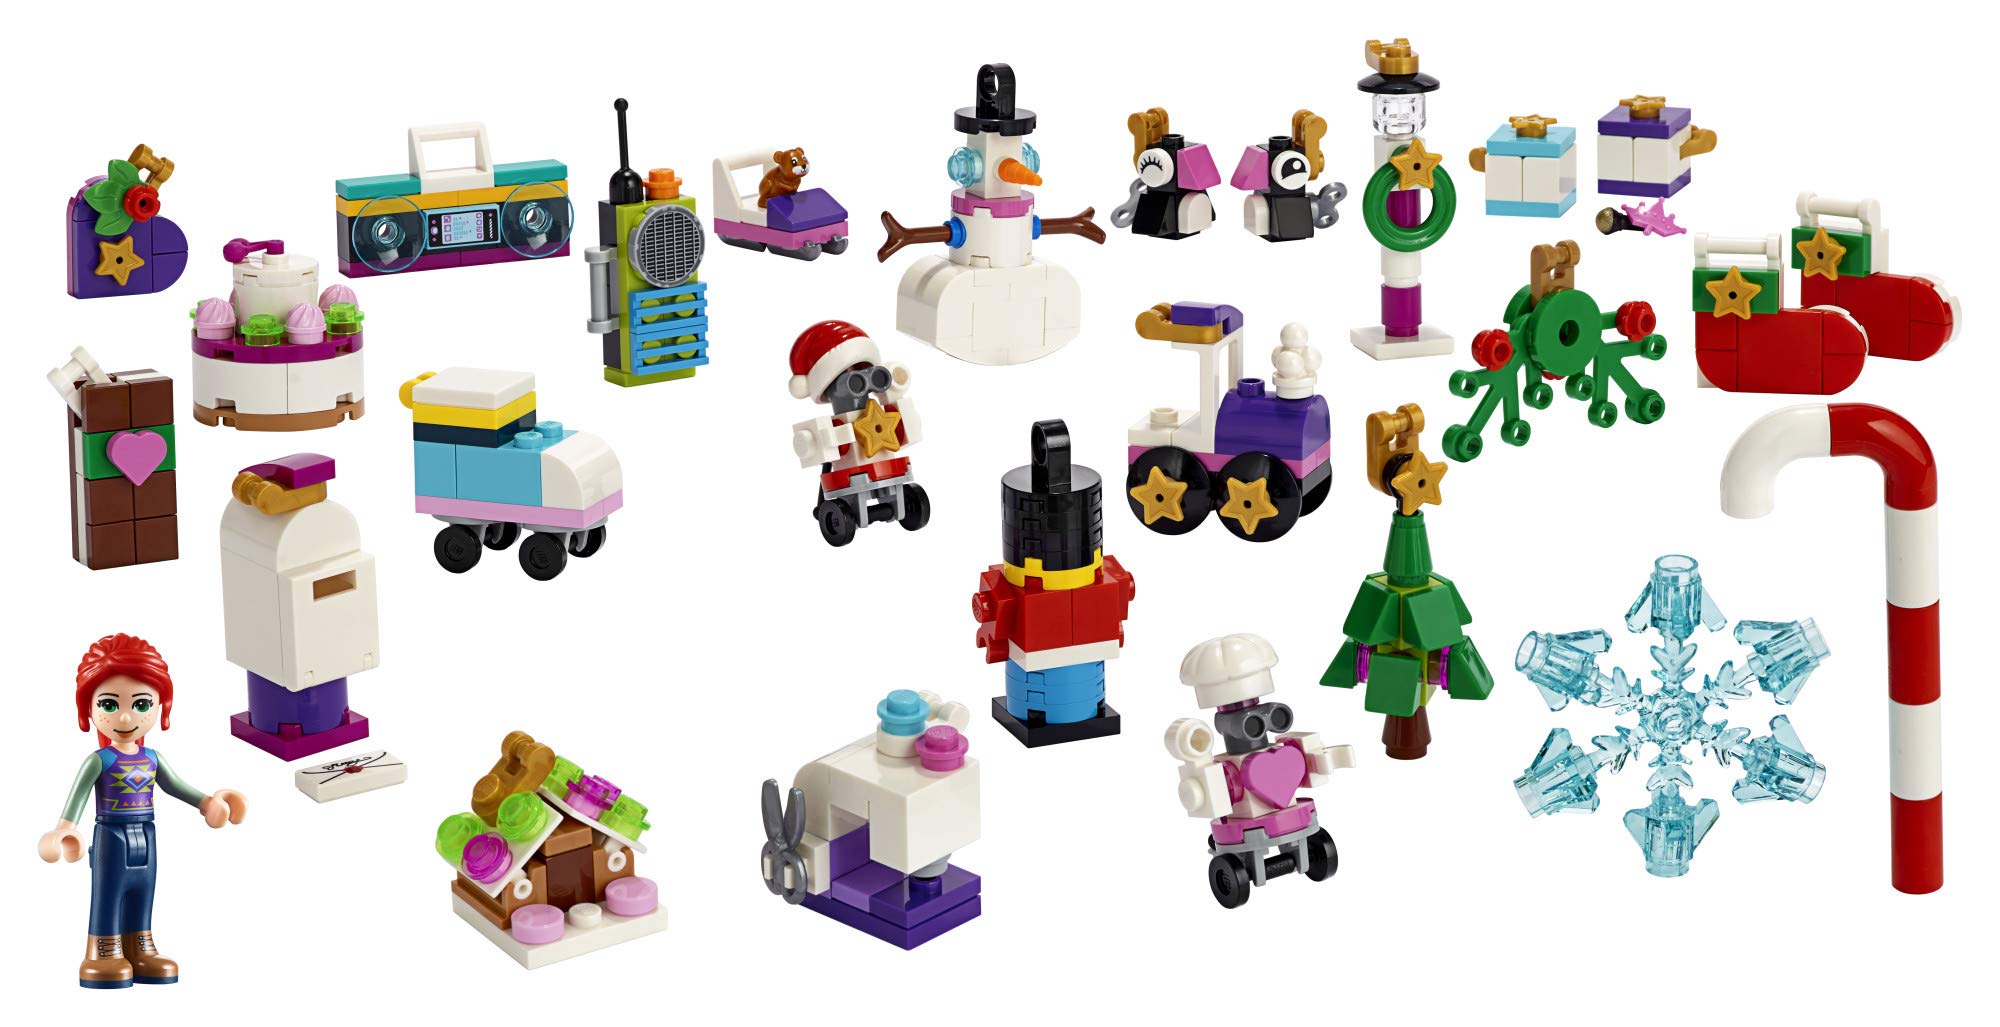 LEGO Friends Advent Calendar 41382 Building Kit (330 Pieces) (Discontinued by Manufacturer)